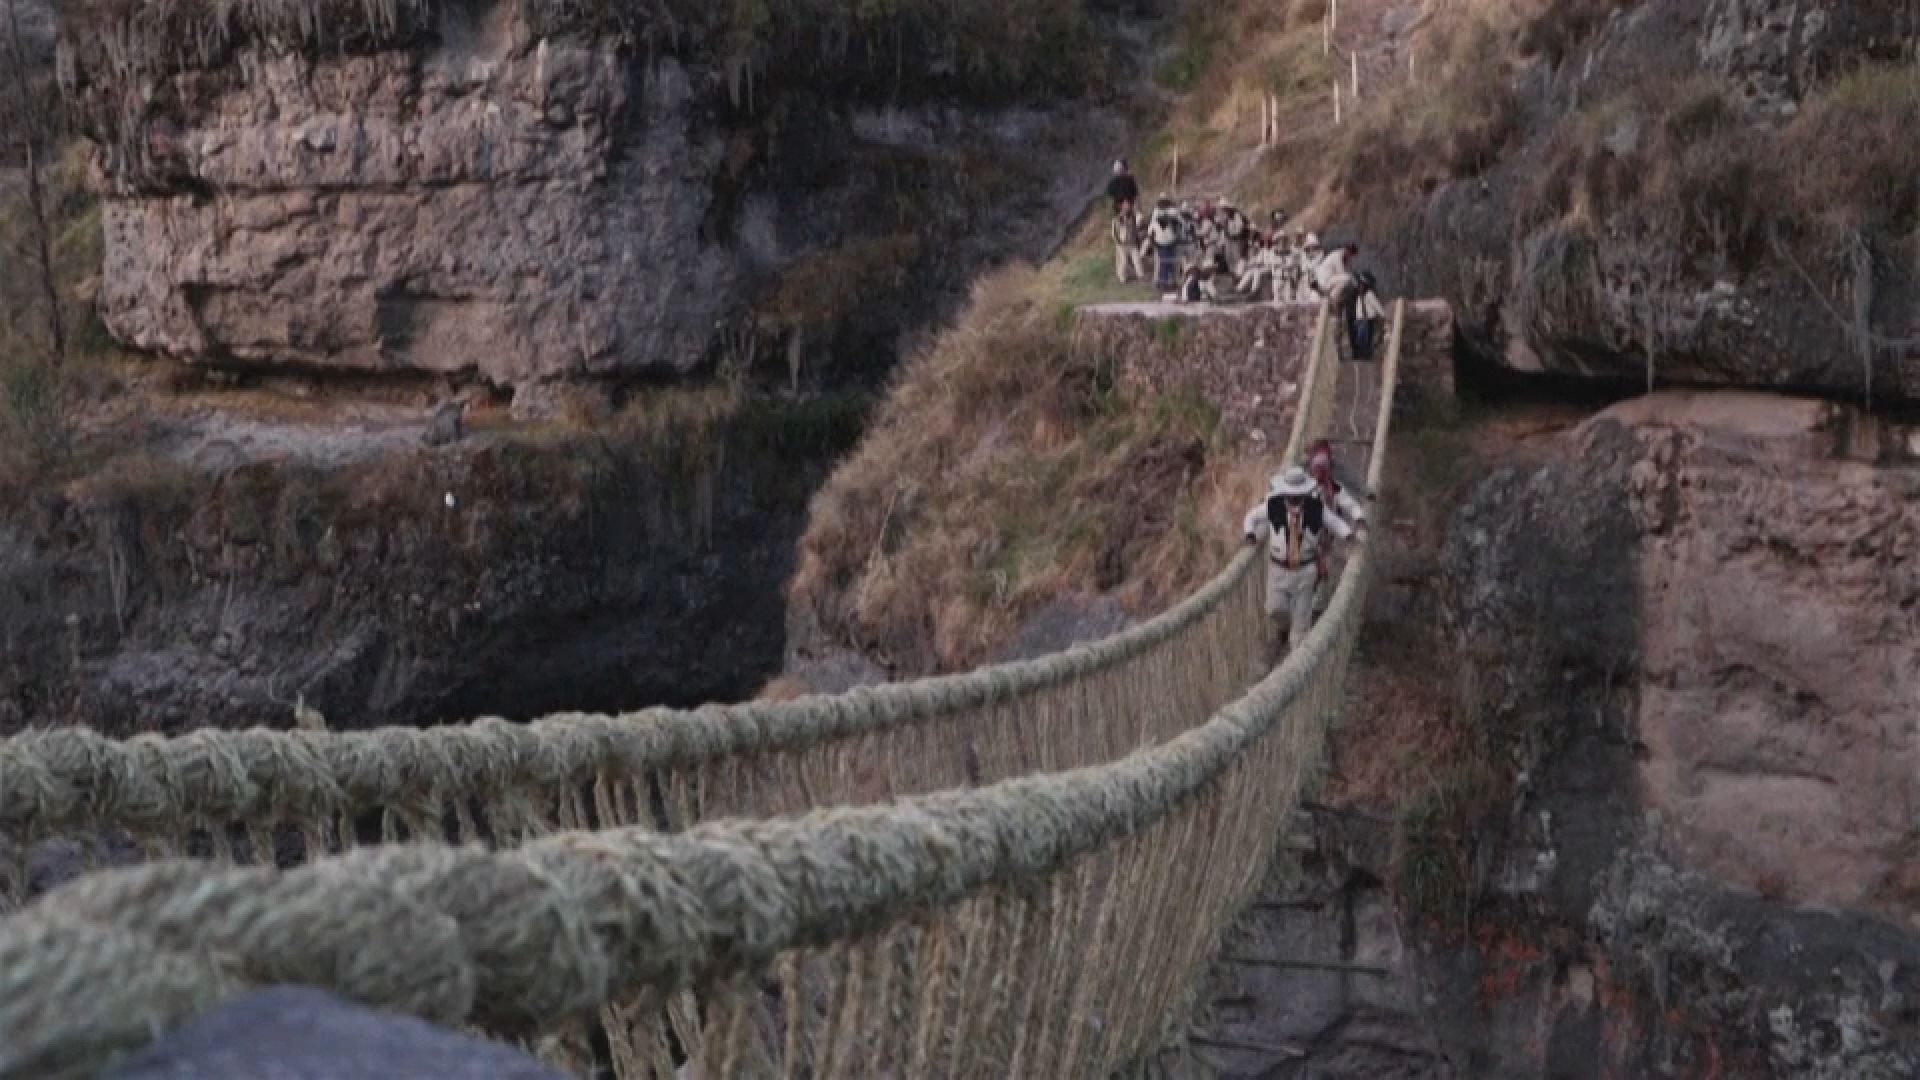 Video. WATCH: Rope bridges preserving the Inca heritage